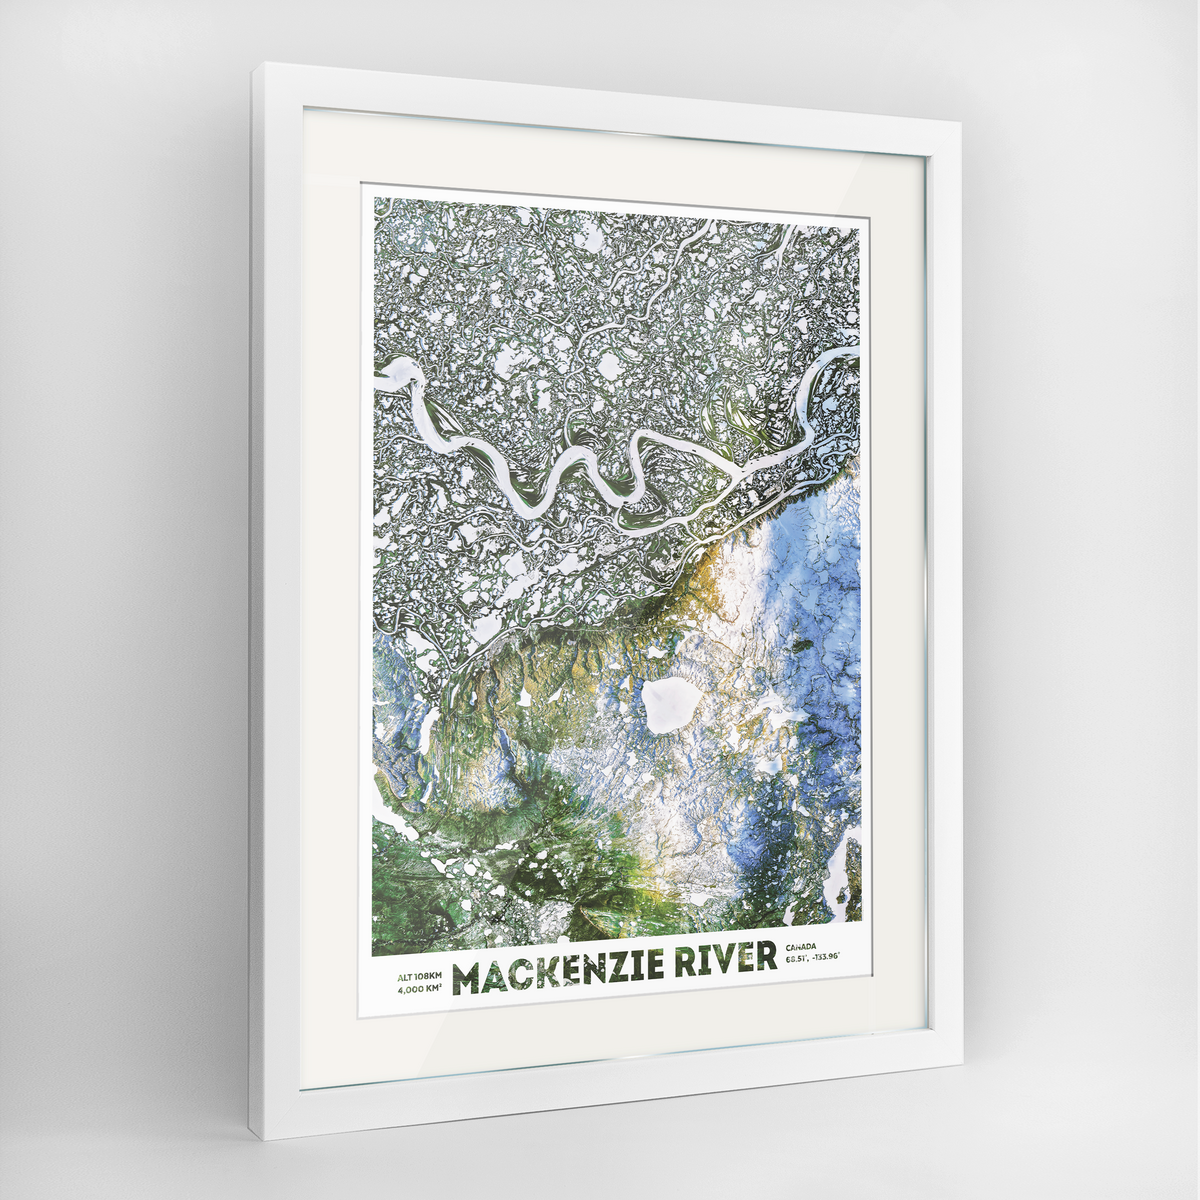 Mackenzie River Earth Photography Art Print - Framed